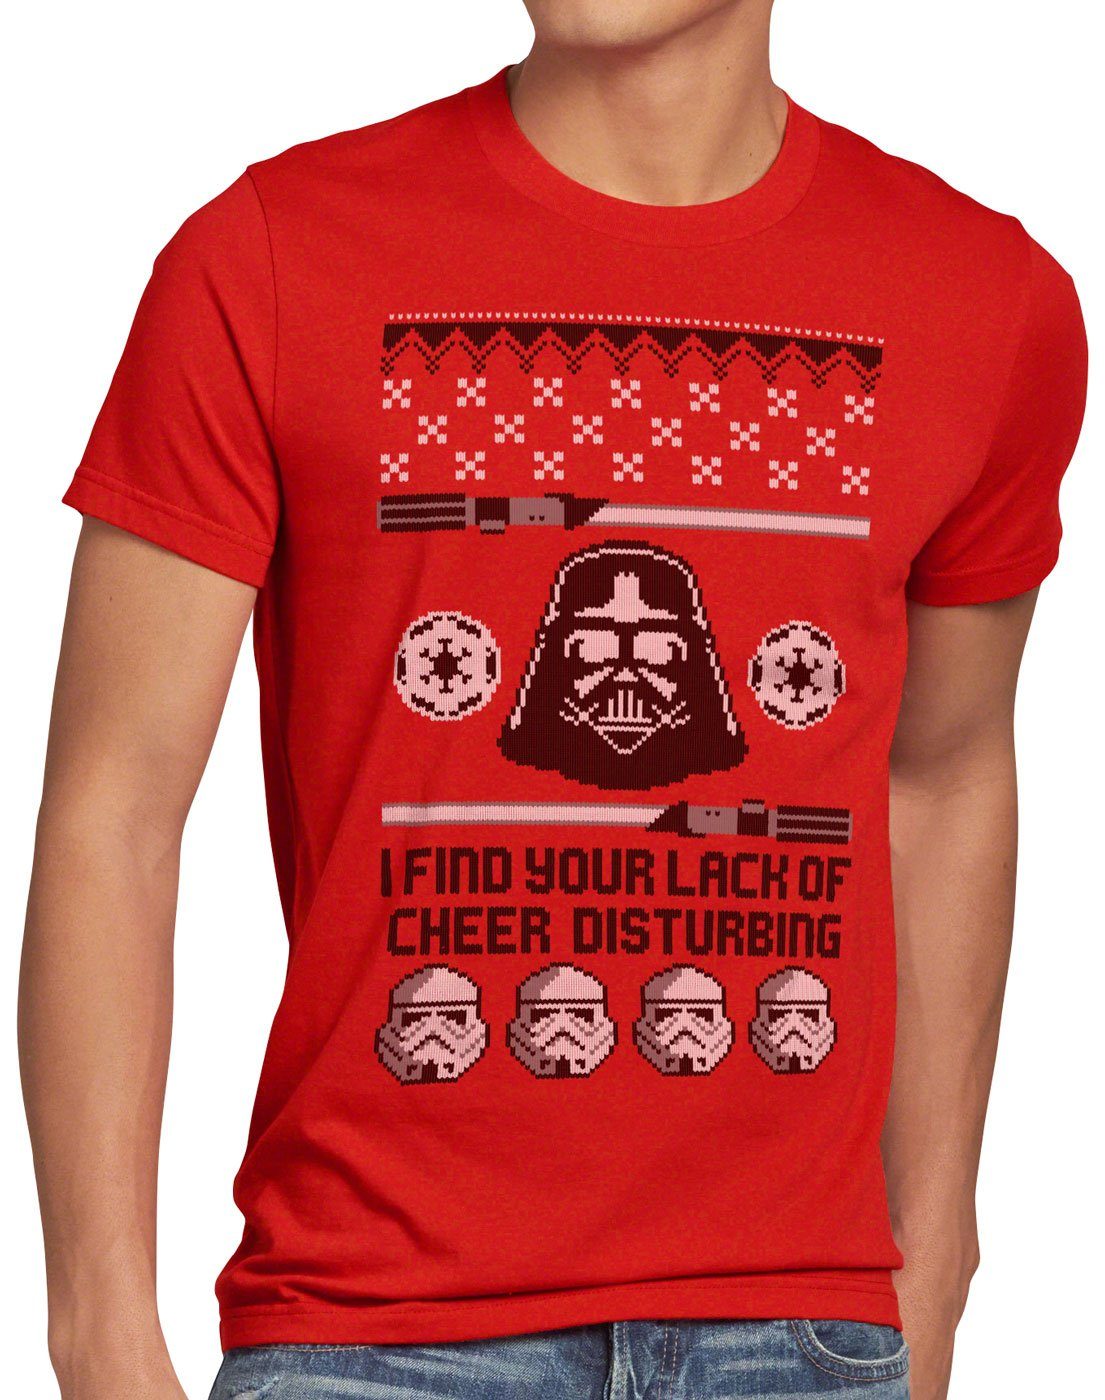 of style3 sith pulli T-Shirt Cheer lichtschwert Lack Print-Shirt Ugly rot Herren weihnachtsbaum x-mas vader Sweater